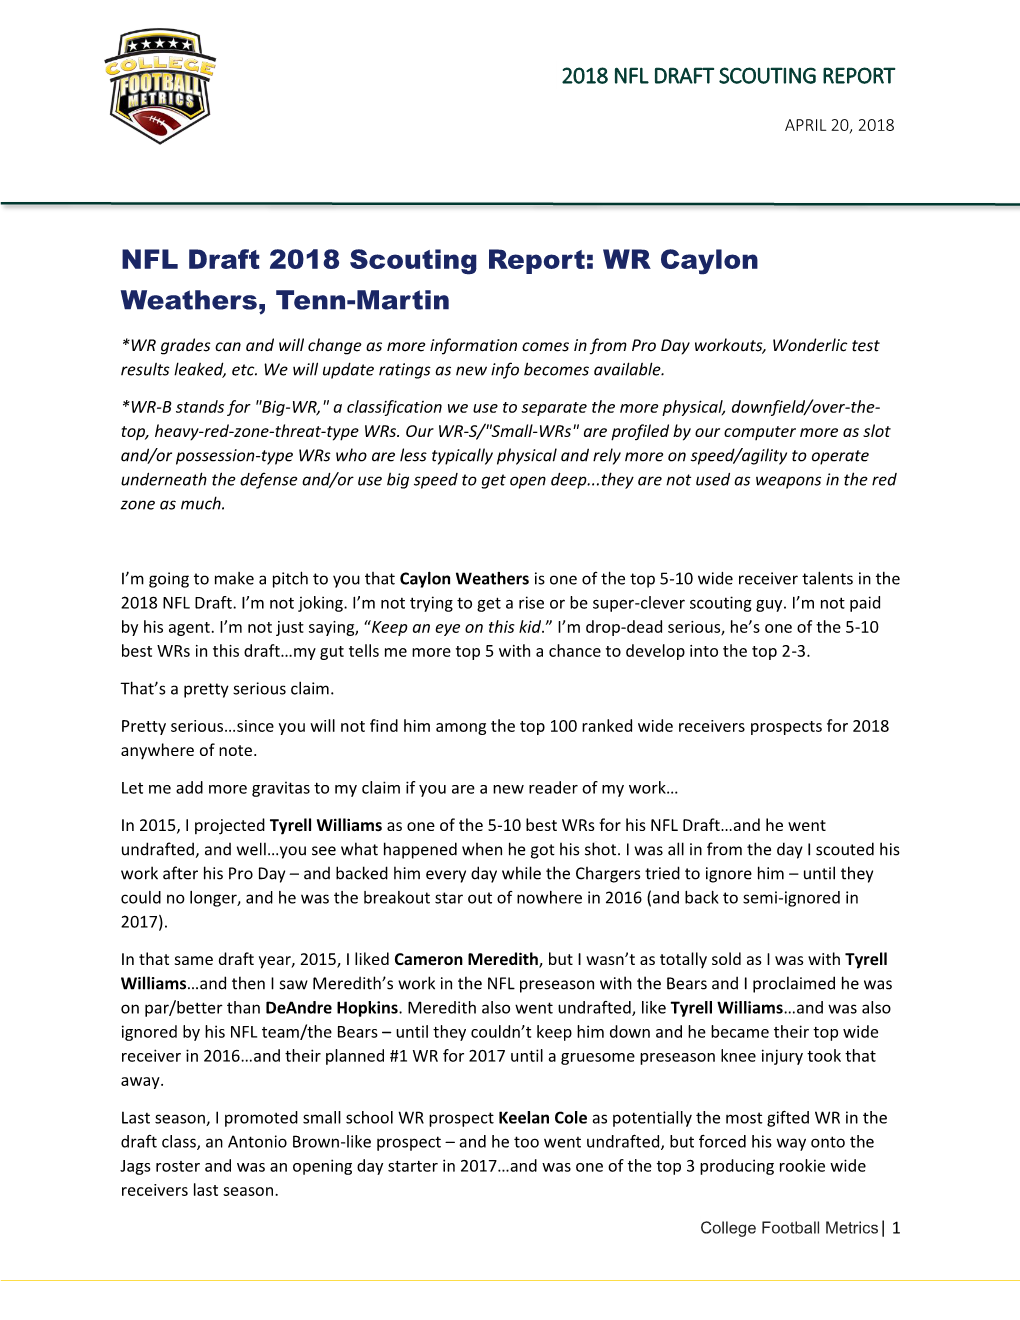 NFL Draft 2018 Scouting Report: WR Caylon Weathers, Tenn-Martin